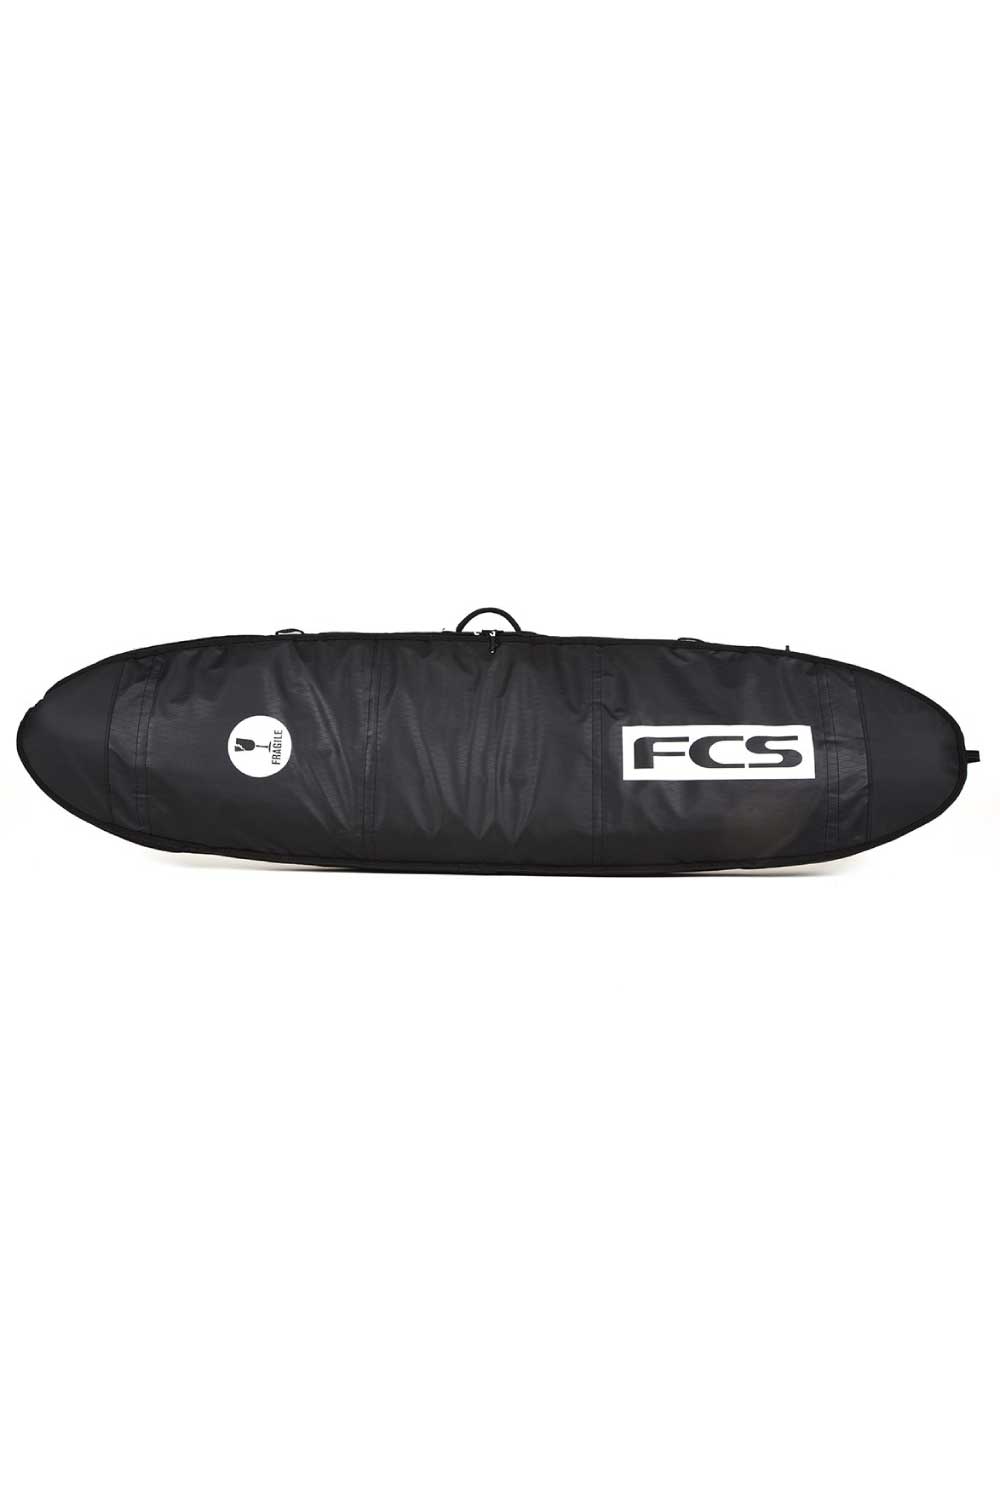 FCS Travel 1 Longboard Surfboard Cover